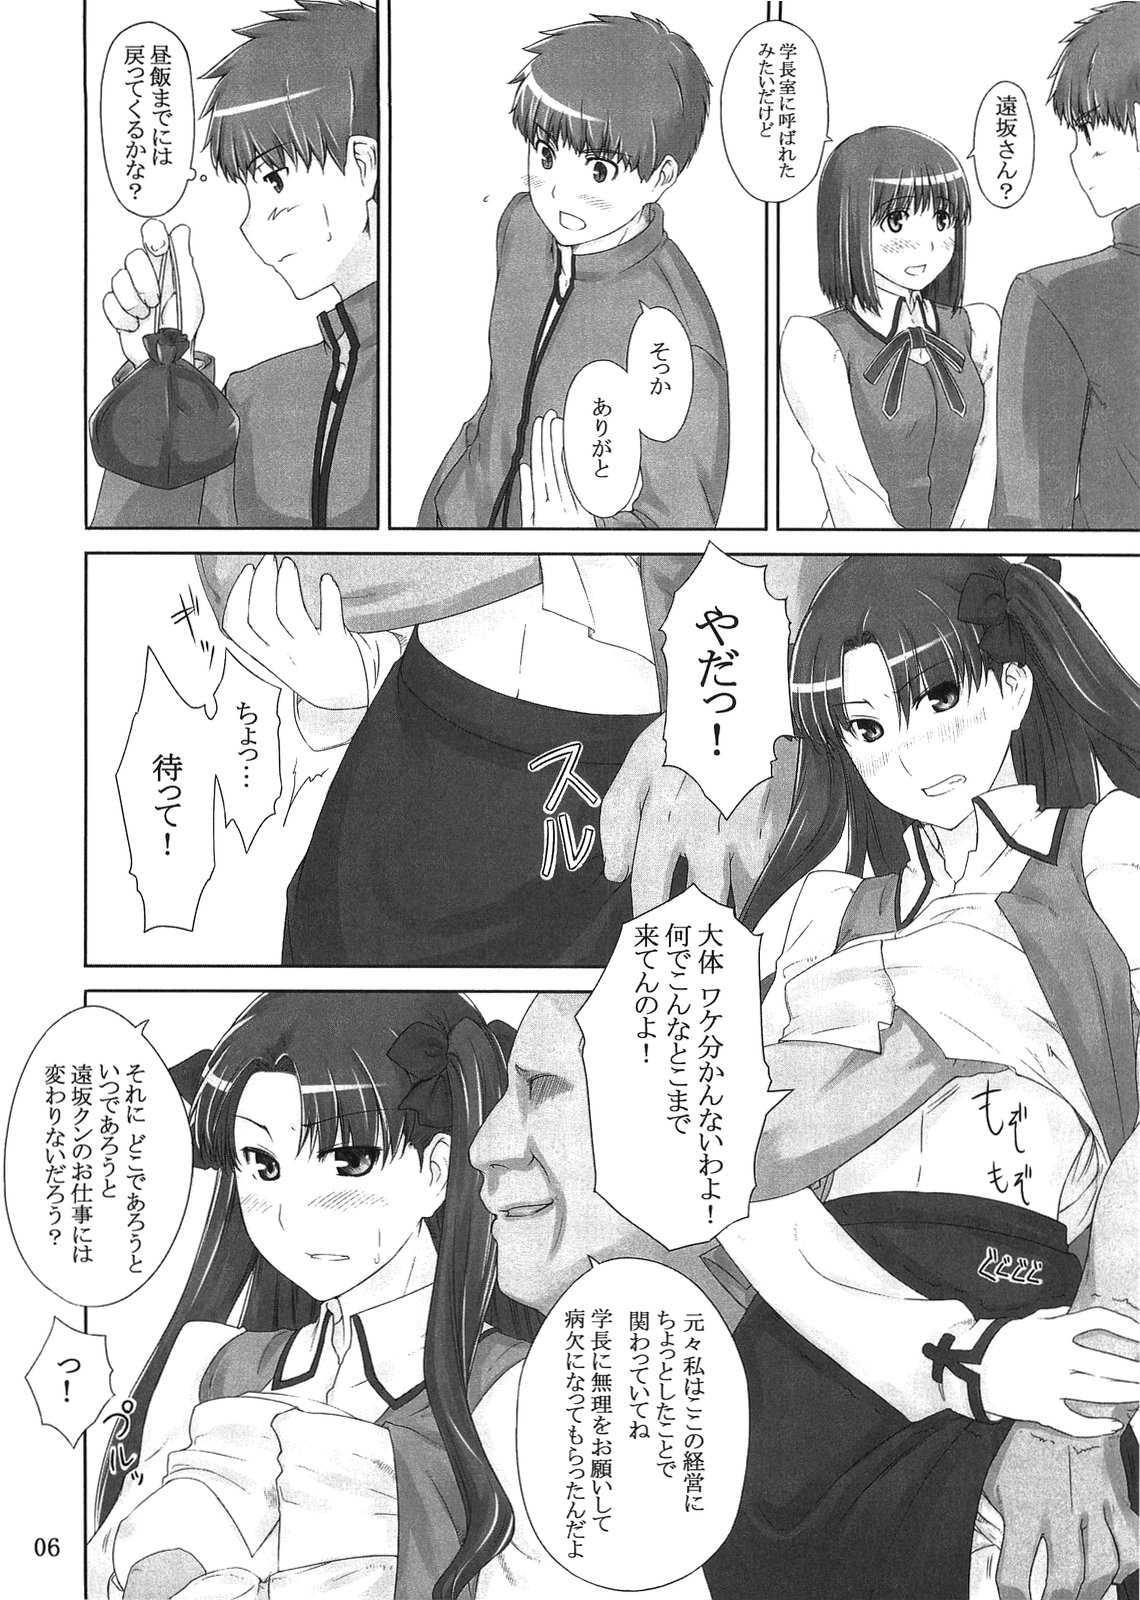 Facial Tohsaka-ke no Kakei Jijou 2 - Fate stay night Oriental - Page 6